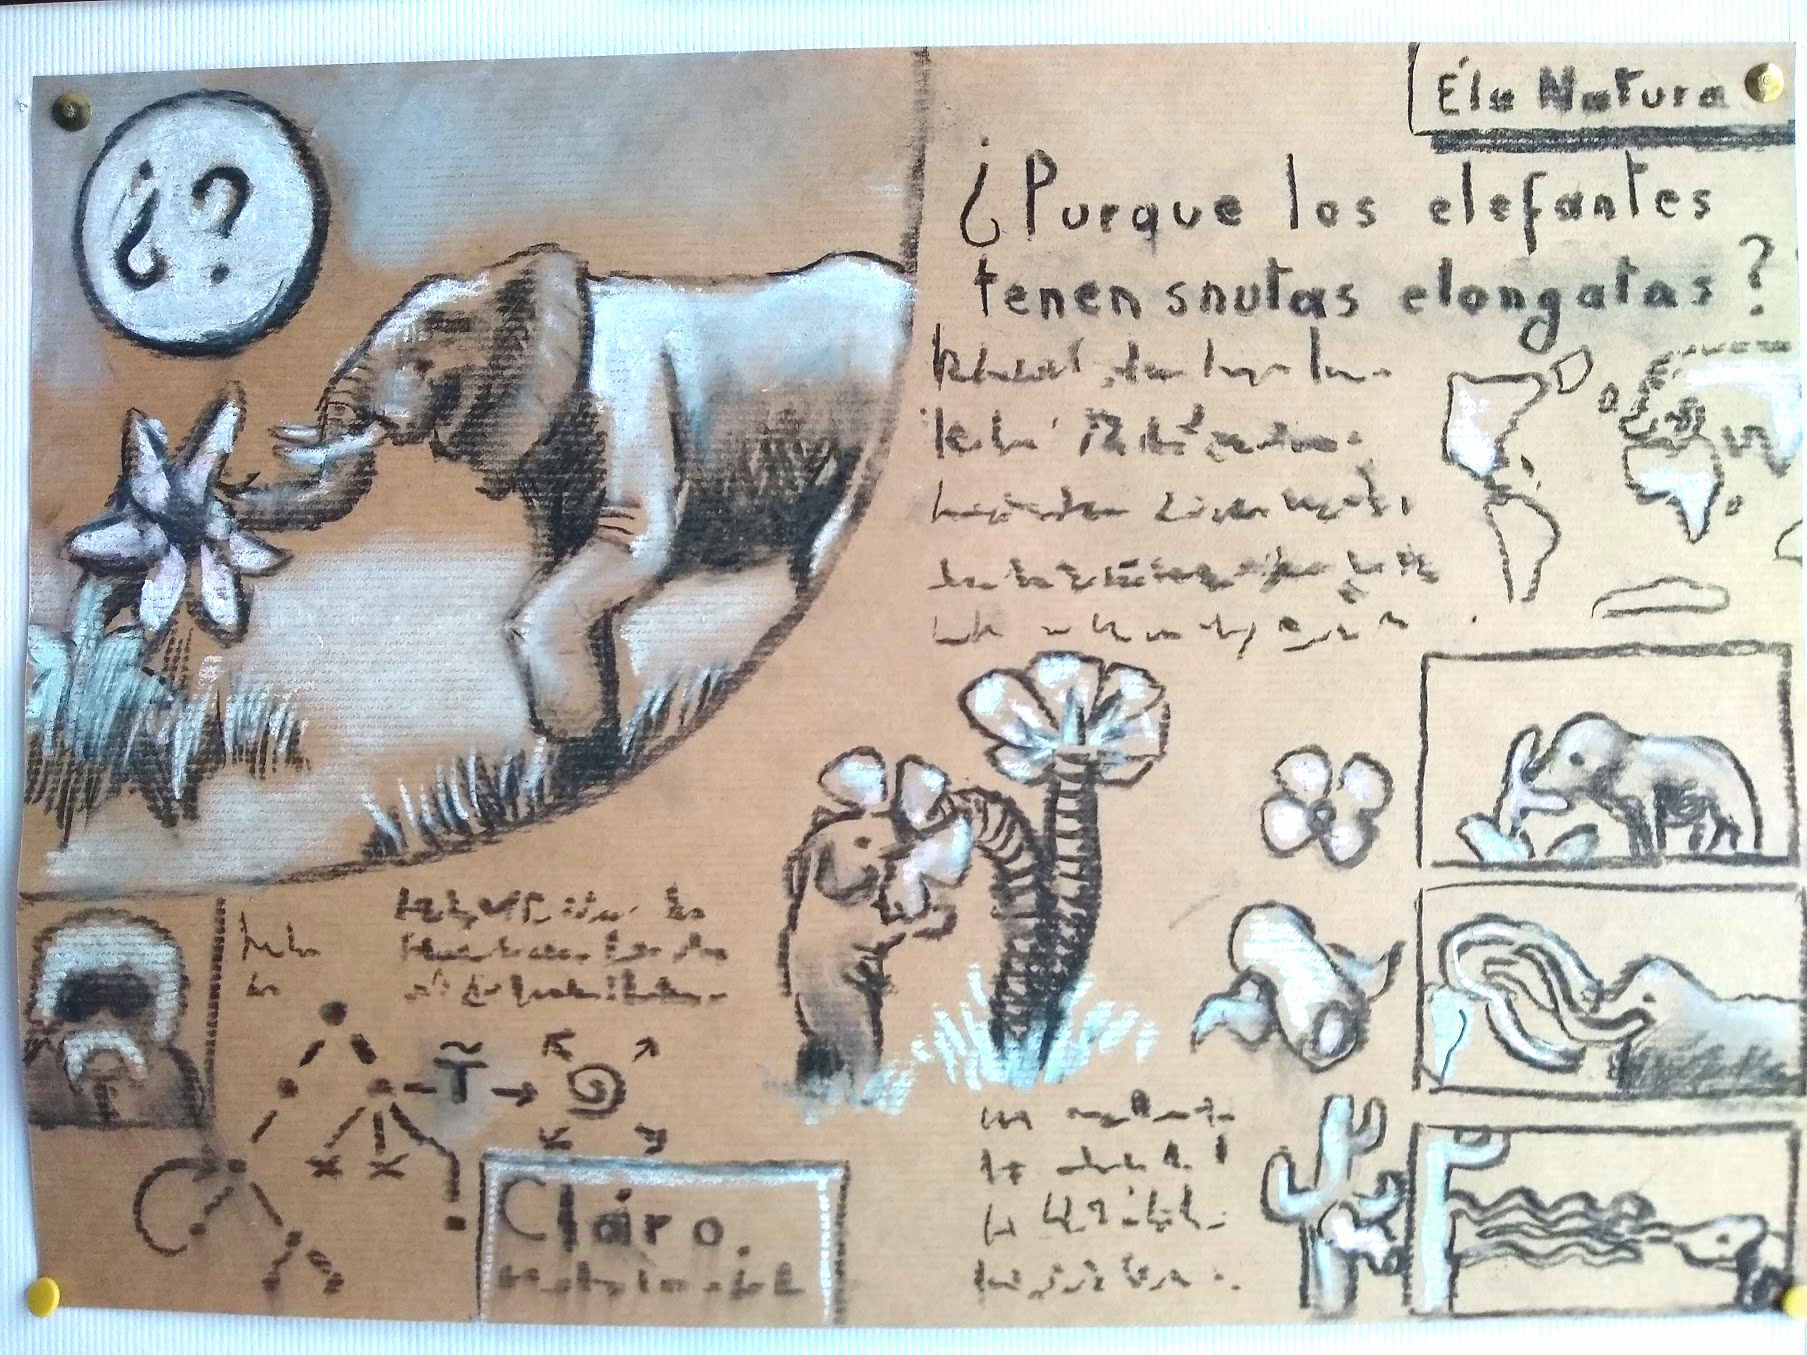 Purque los elefantes tienes snutas elongatas? An 'educational' illustration in a romance language.